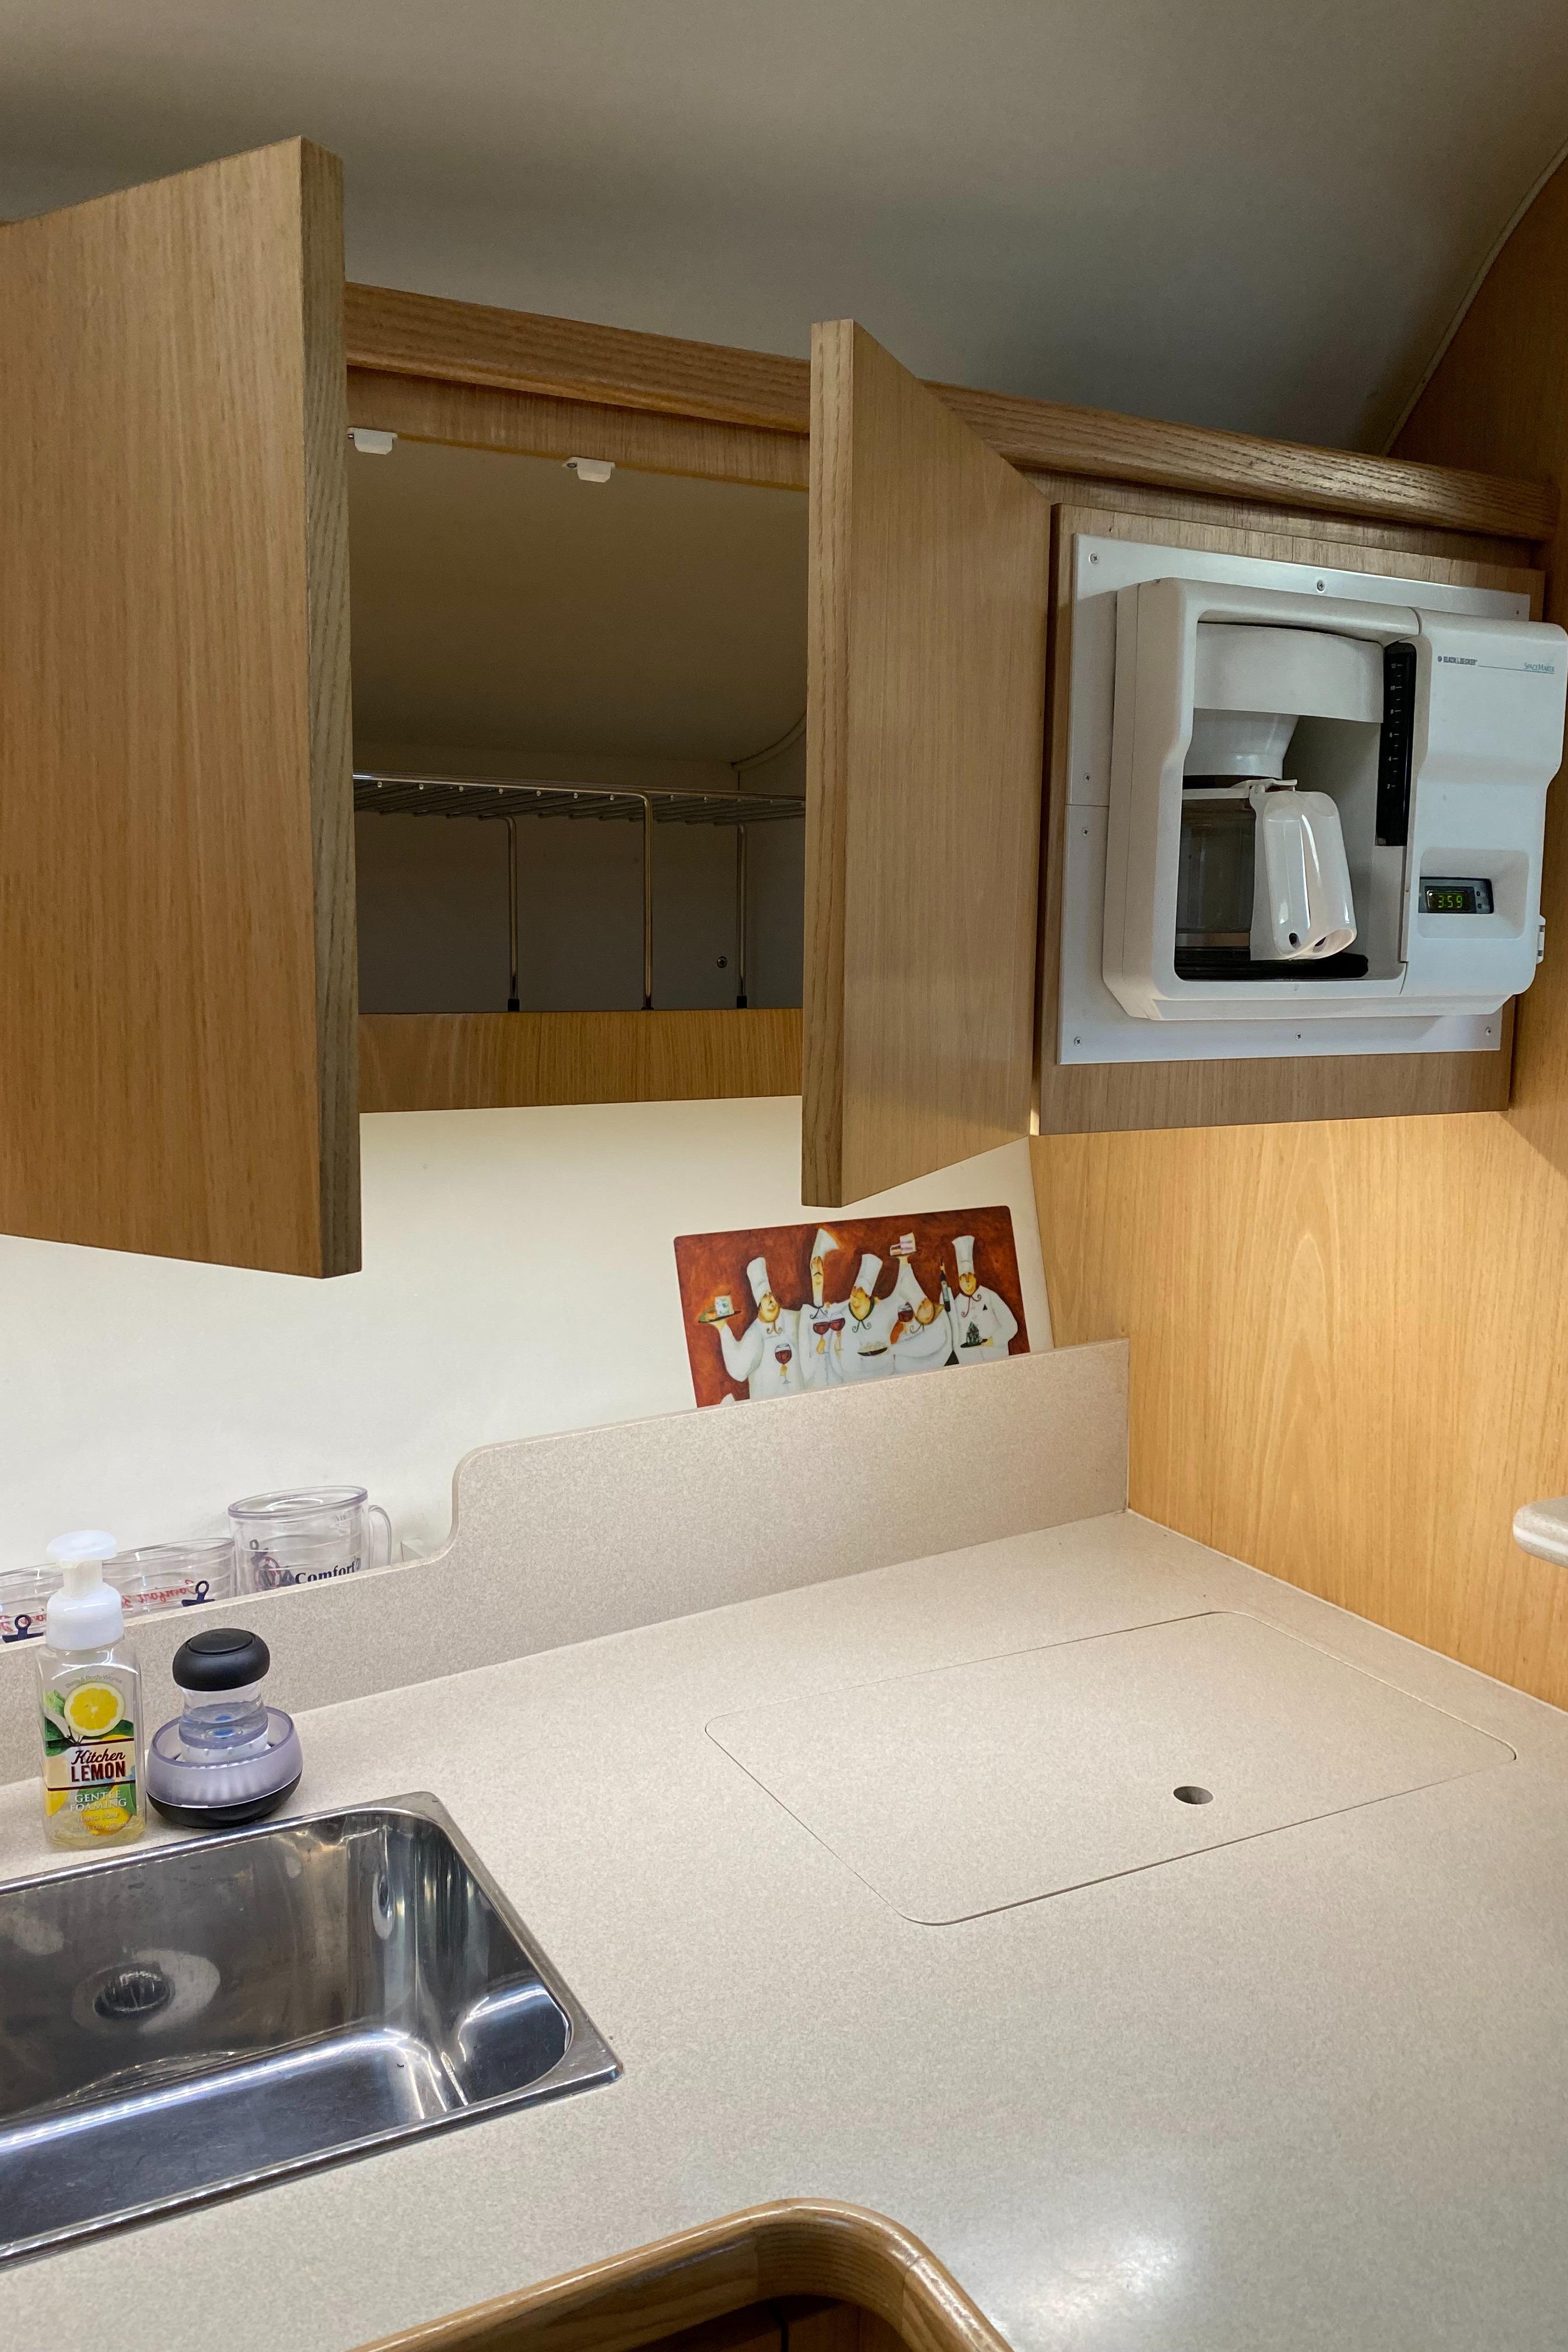 TIARA 4000 Galley overhead storage cabinets, coffee maker, note Corian counters, dry locker in corner